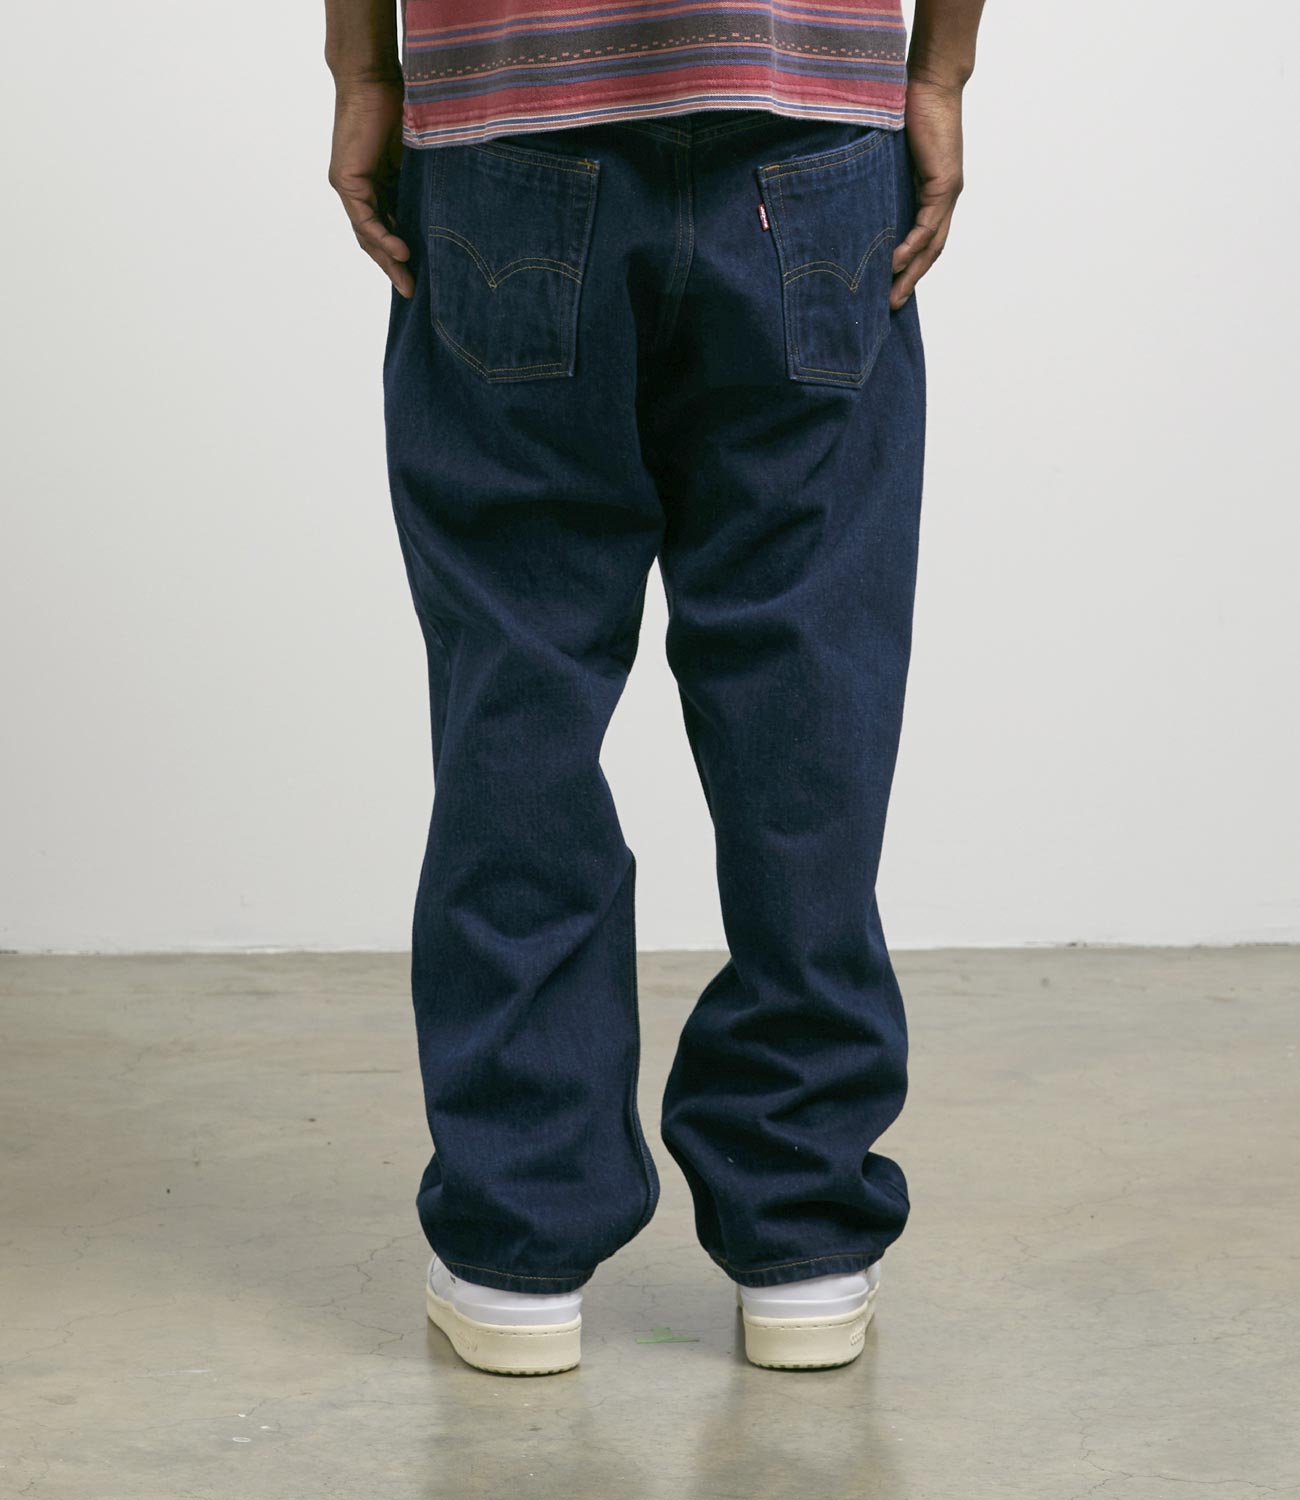 Levi's Skate Baggy 5 Pocket Jeans - buy at Blue Tomato